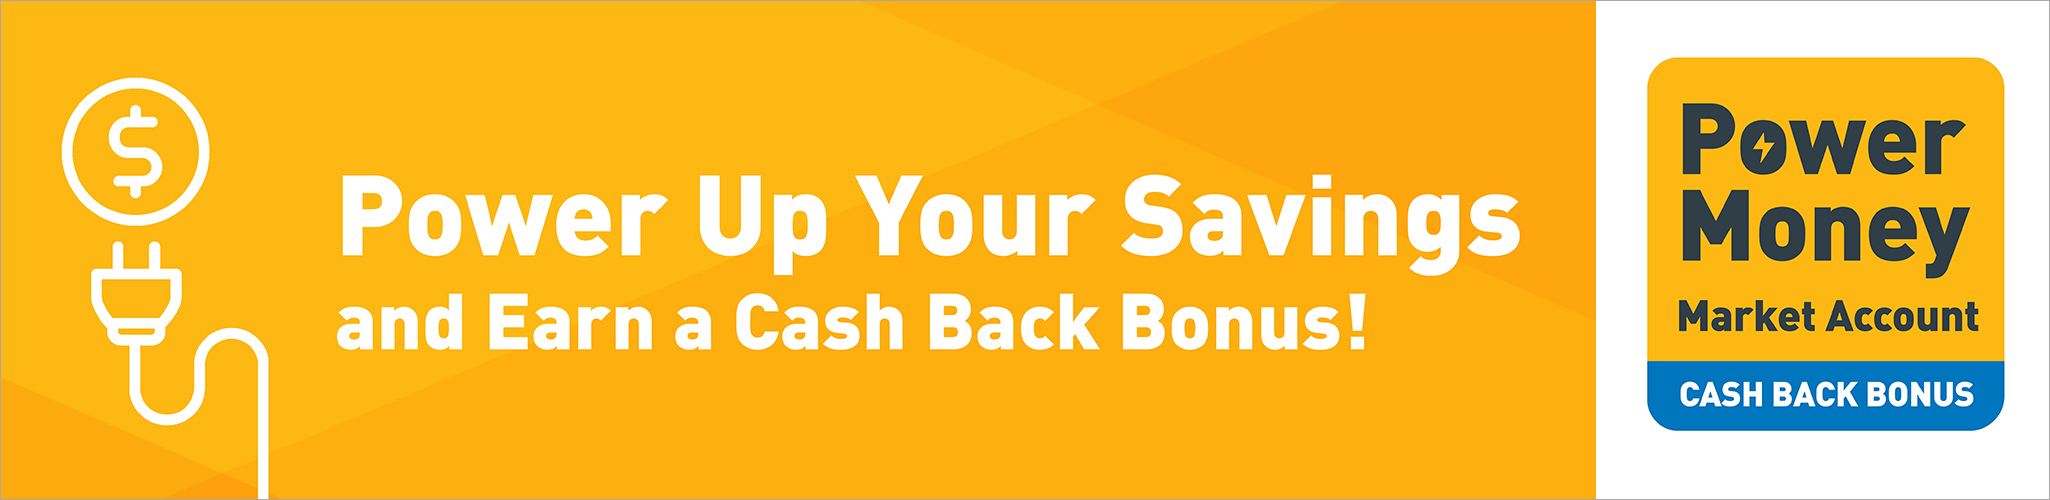 Power Up Your Savings and Earn a Cash Back Bonus